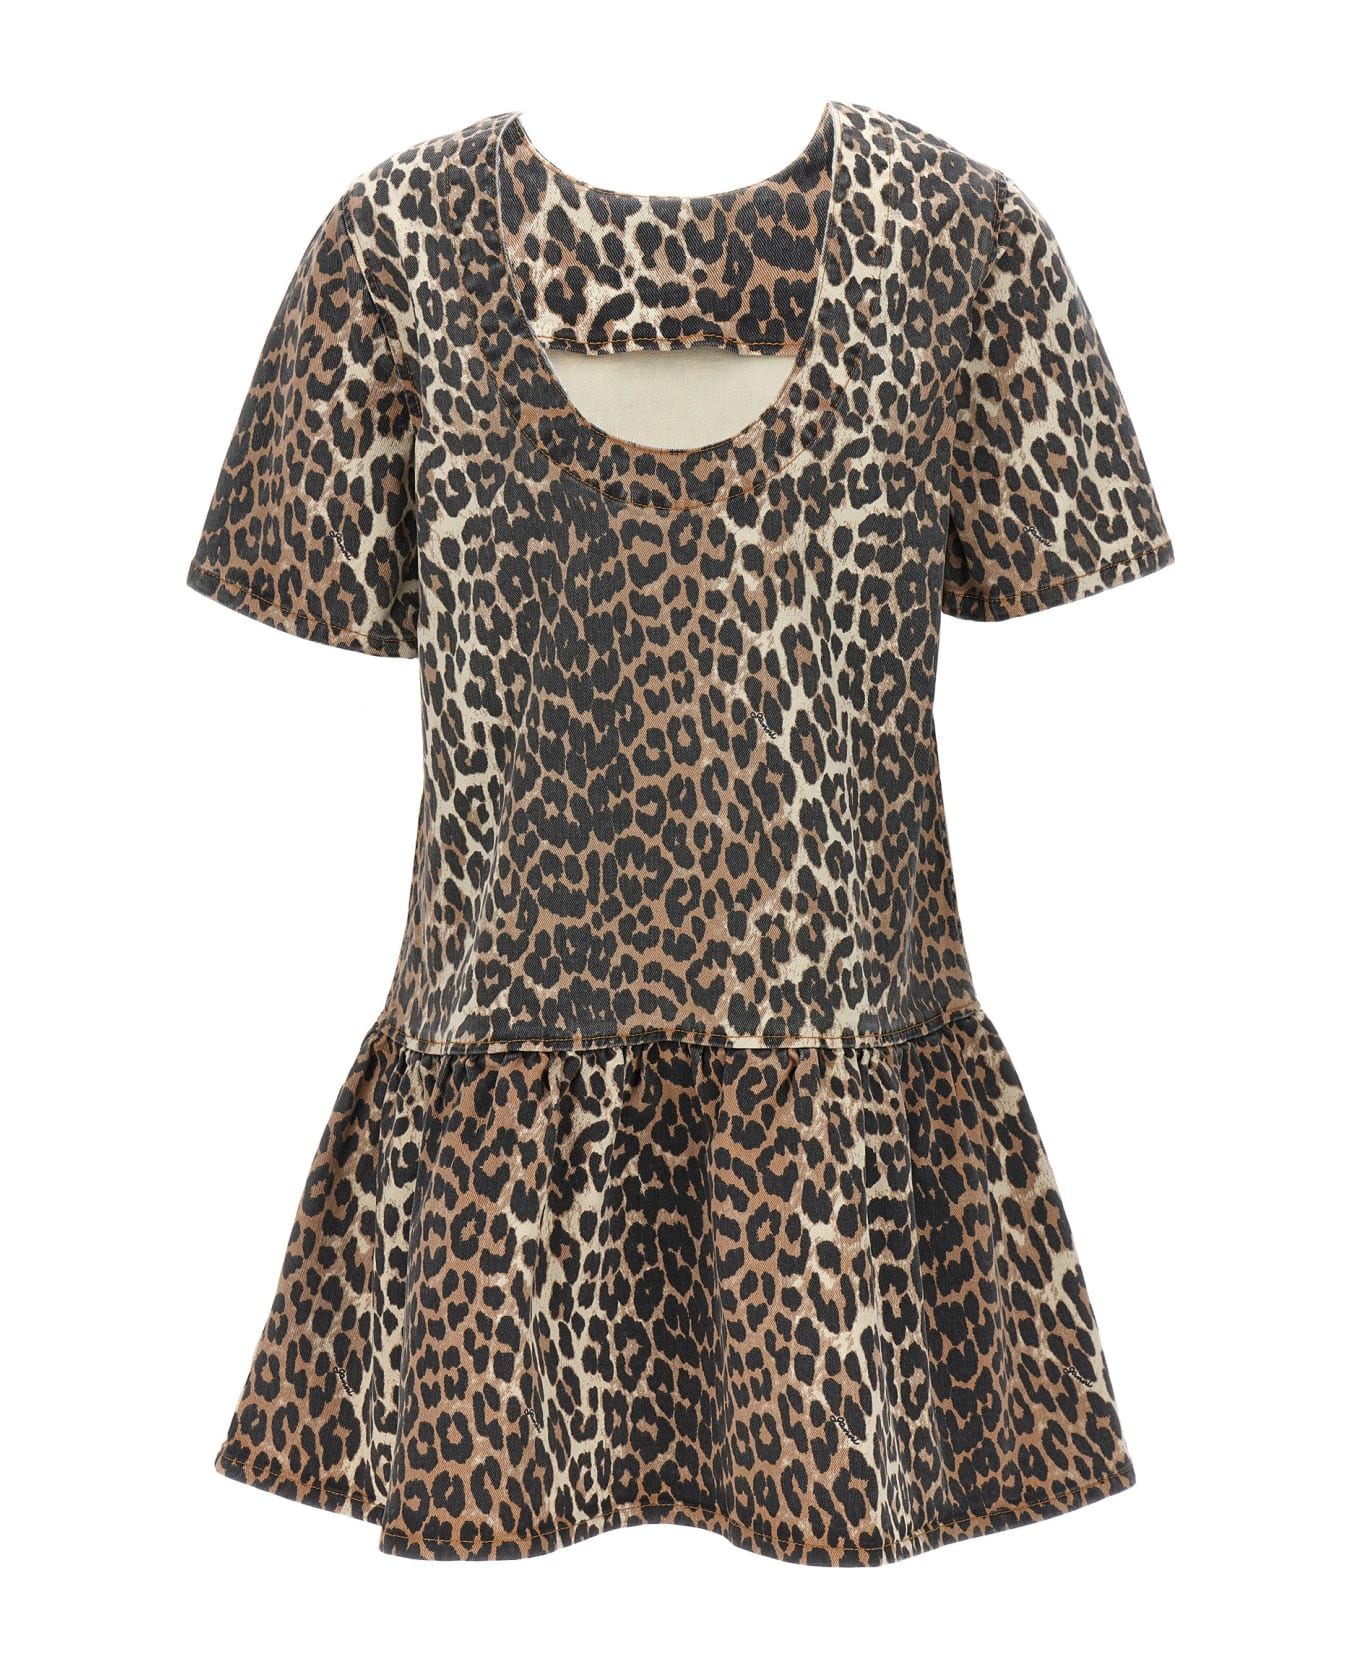 Ganni Animal Print Denim Dress - Leopard